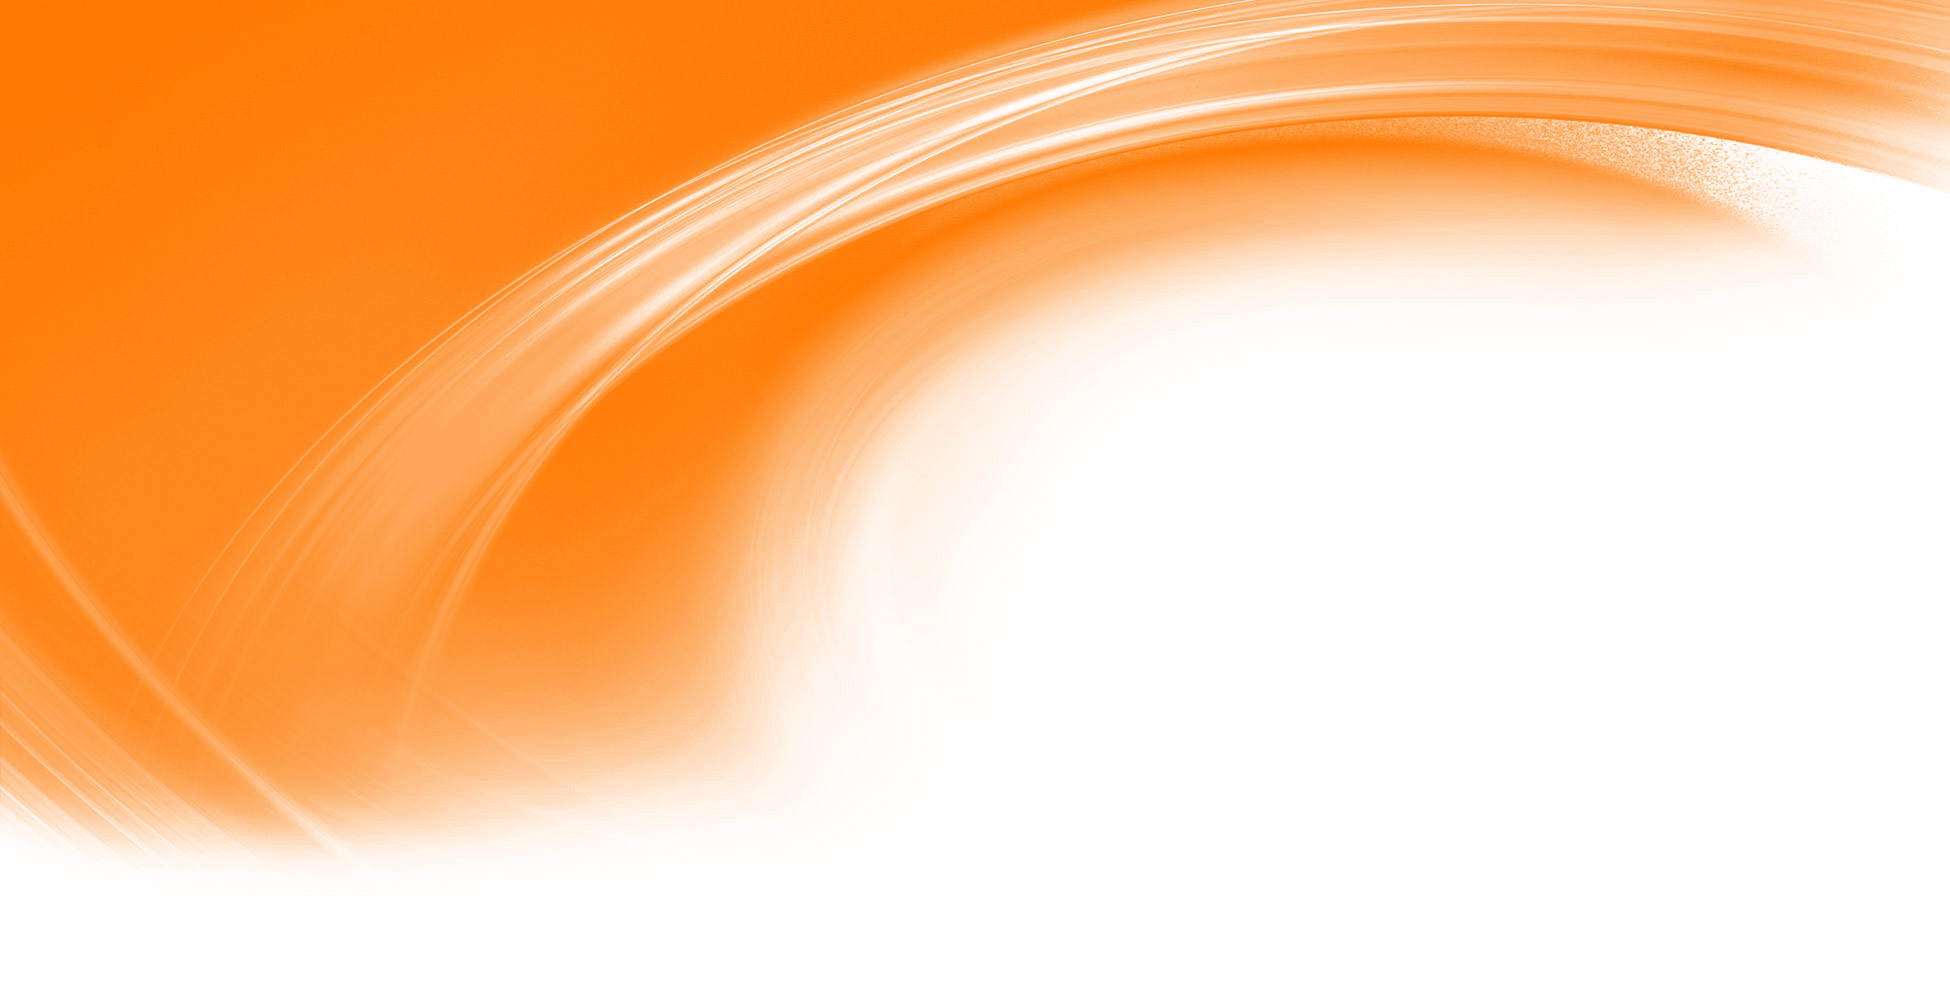 High Resolution Orange And White Background 1950x990 Wallpaper Teahub Io